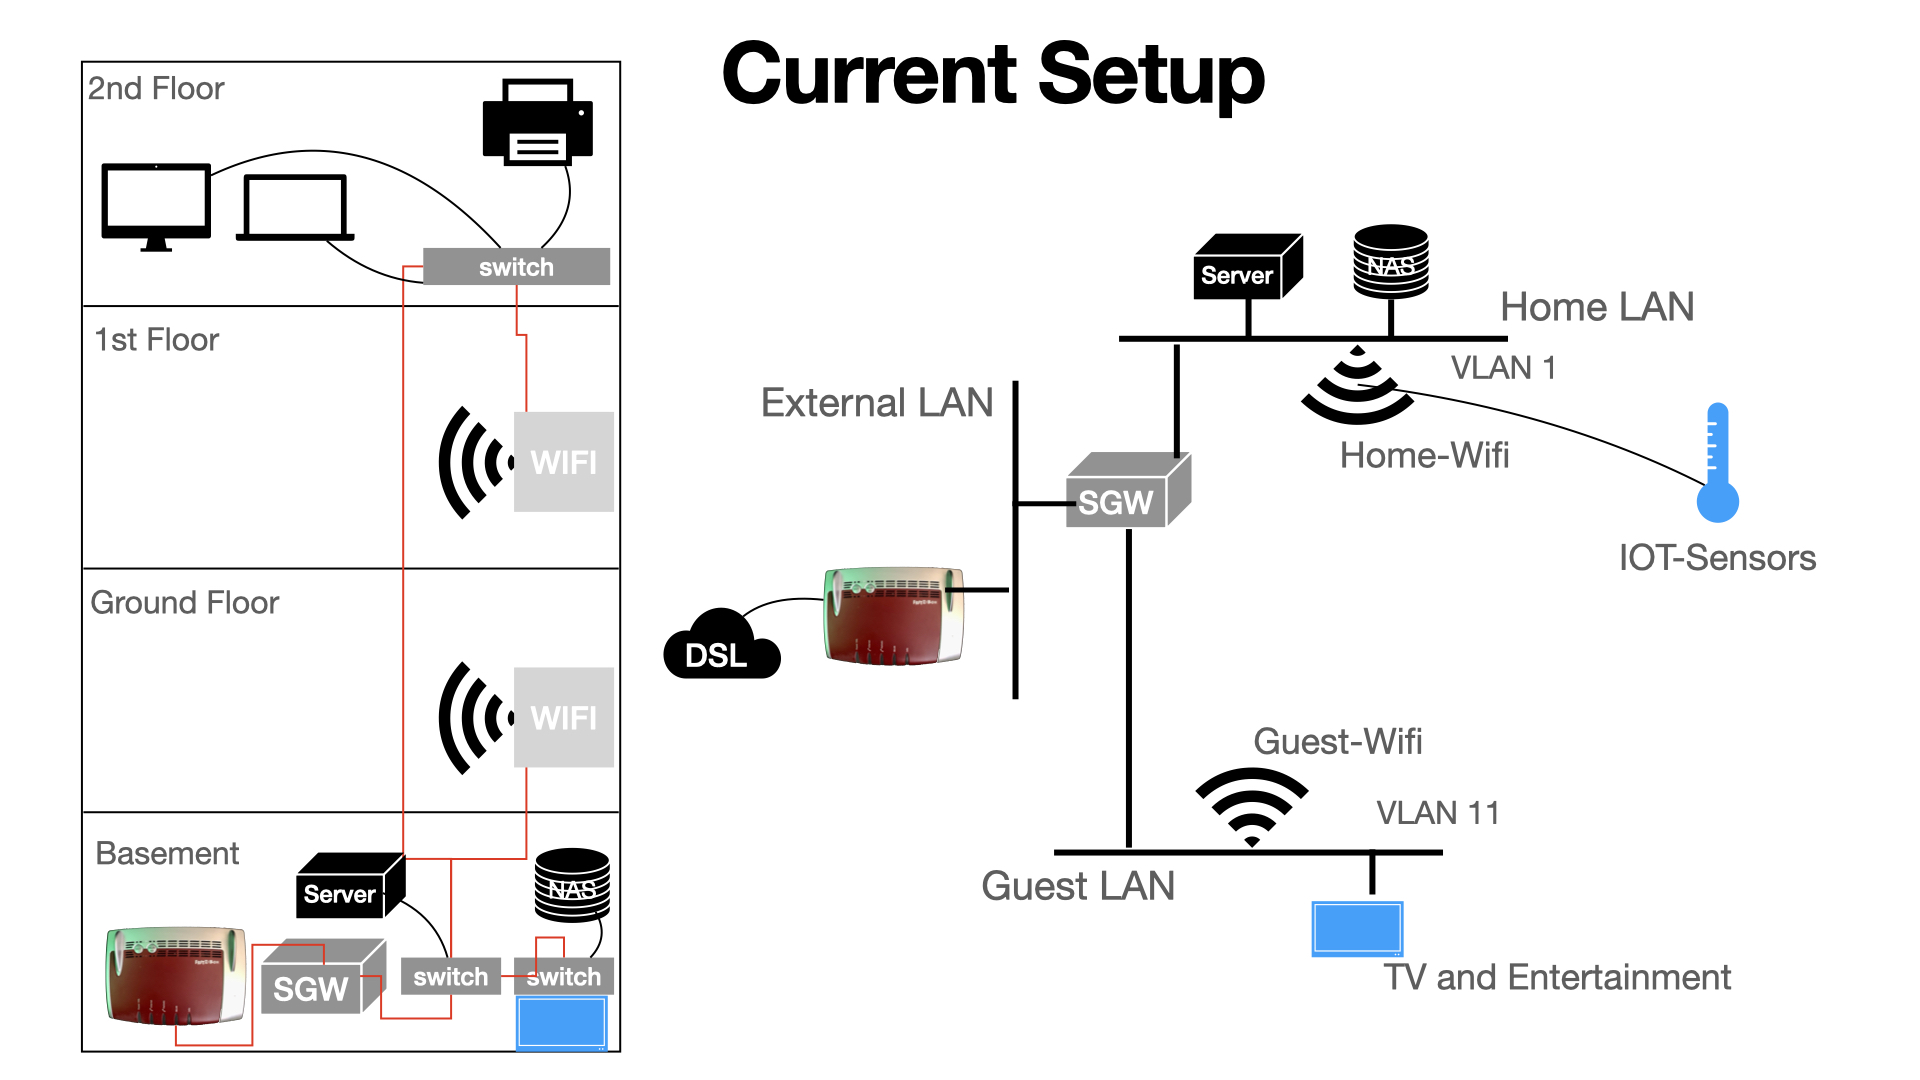 New home network: Current setup